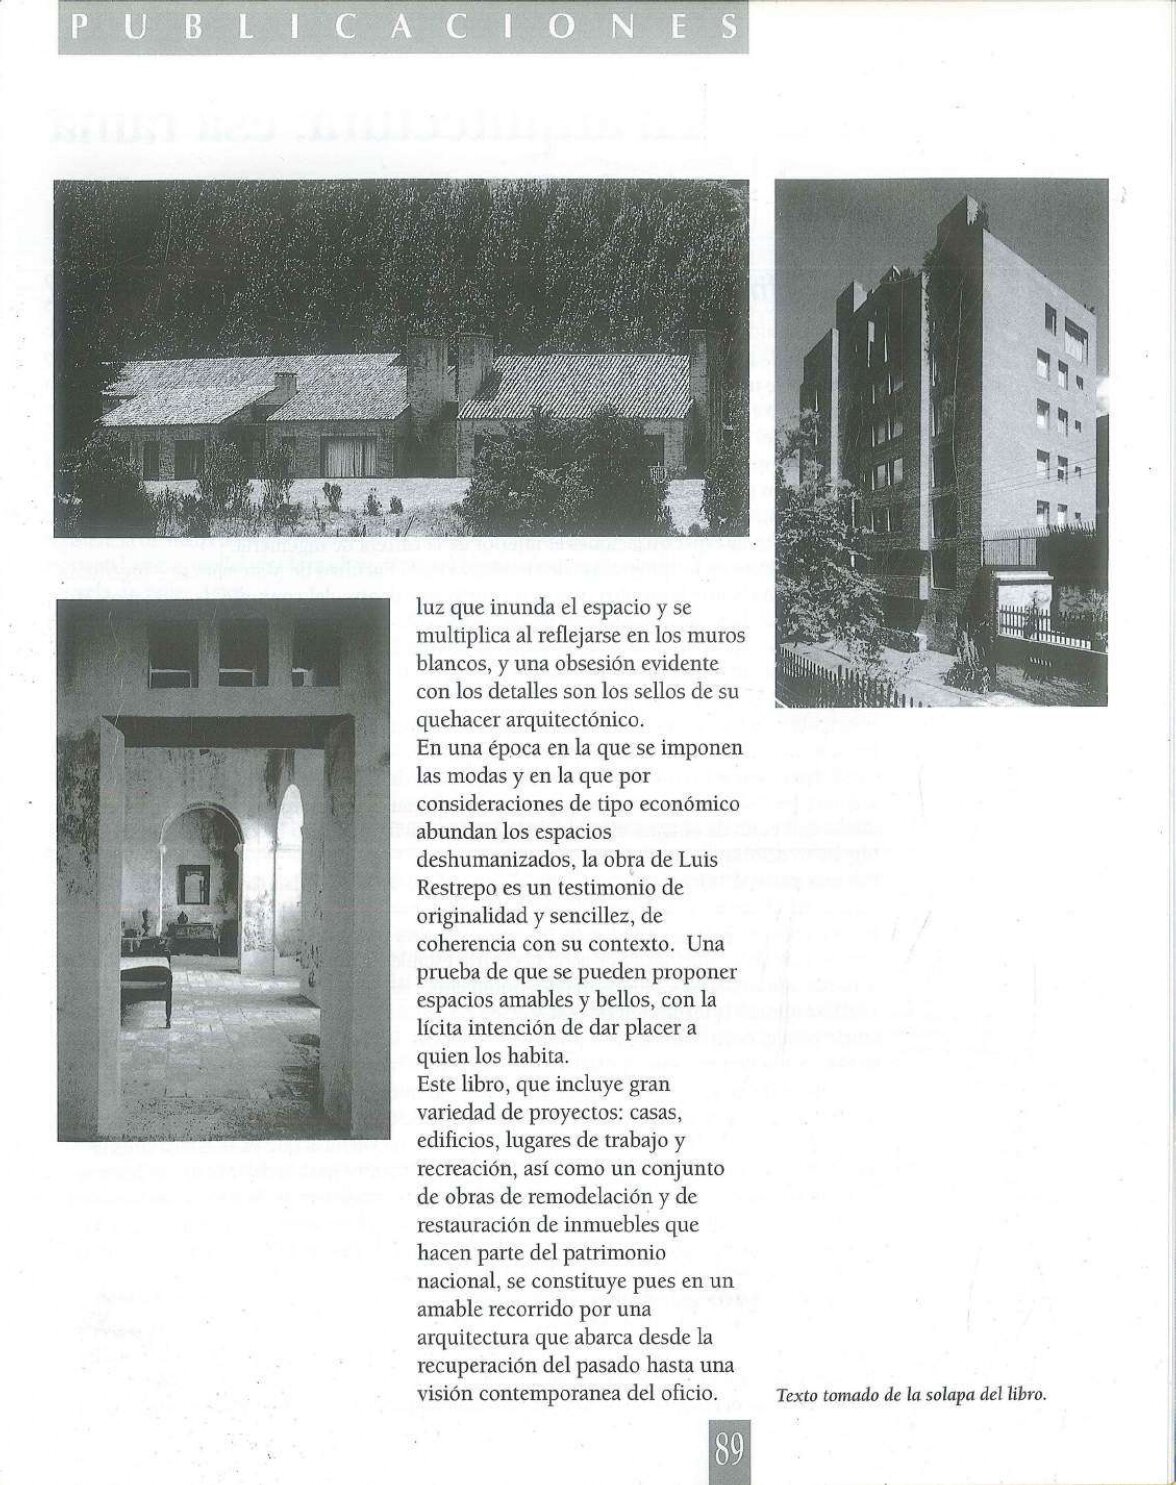 2002_Contexto Urbano- Obra reciente 1995-2002. REVISTA PROA 1_compressed (1)_page-0091.jpg